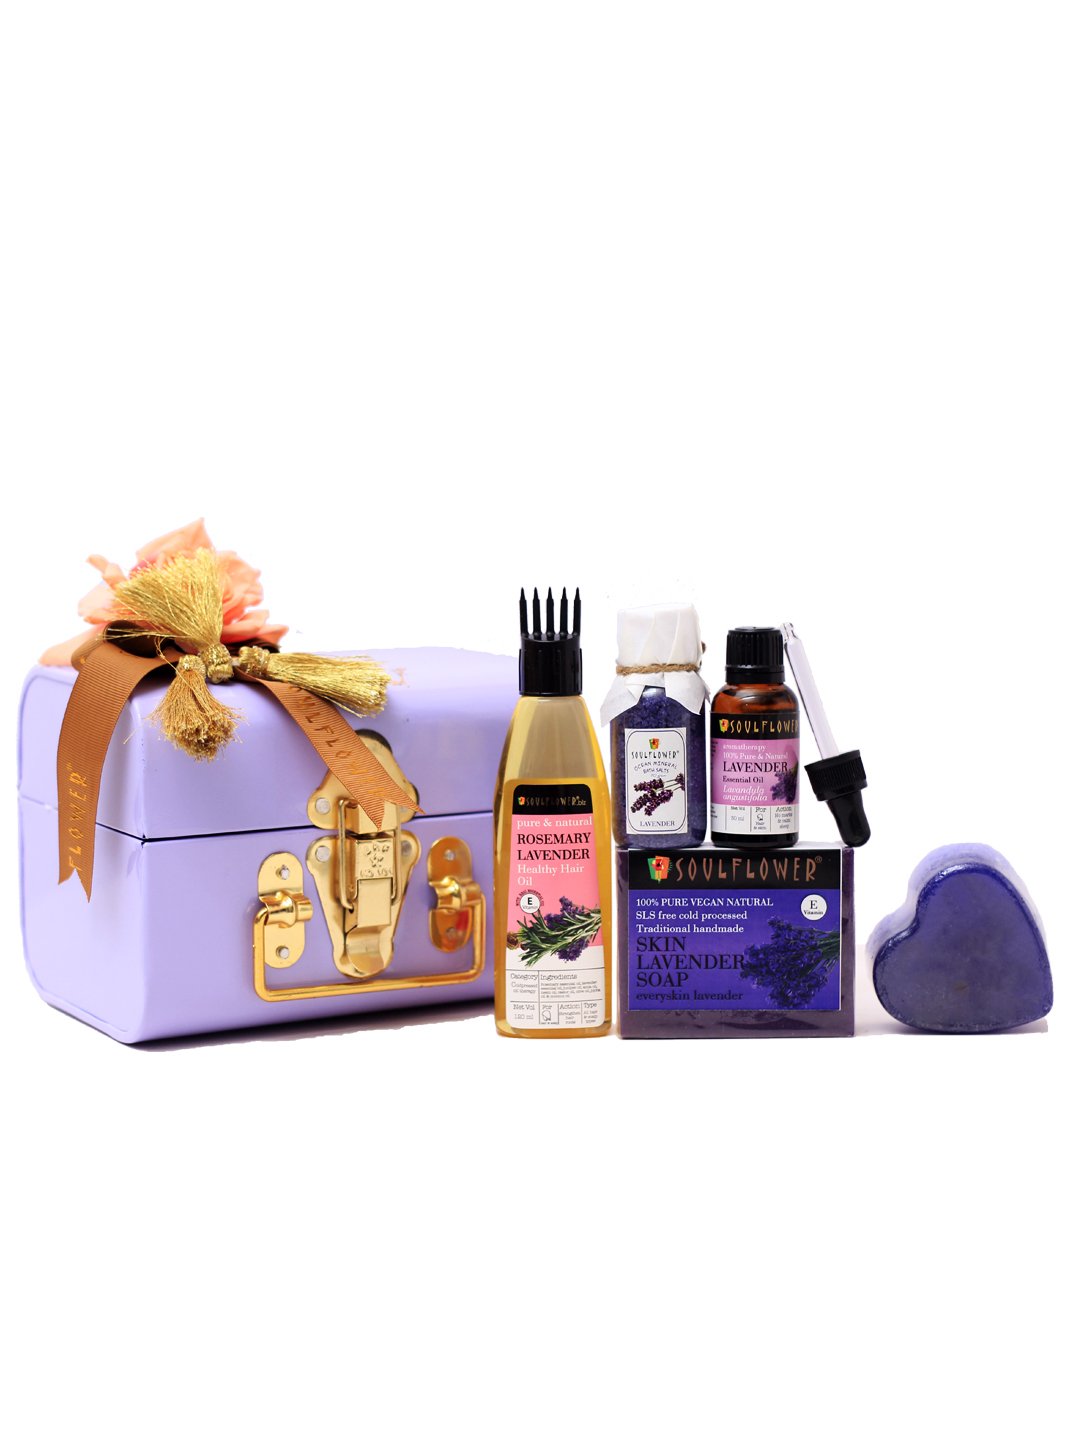 Soulflower Lavender Beauty Sleep Gift Set of 7